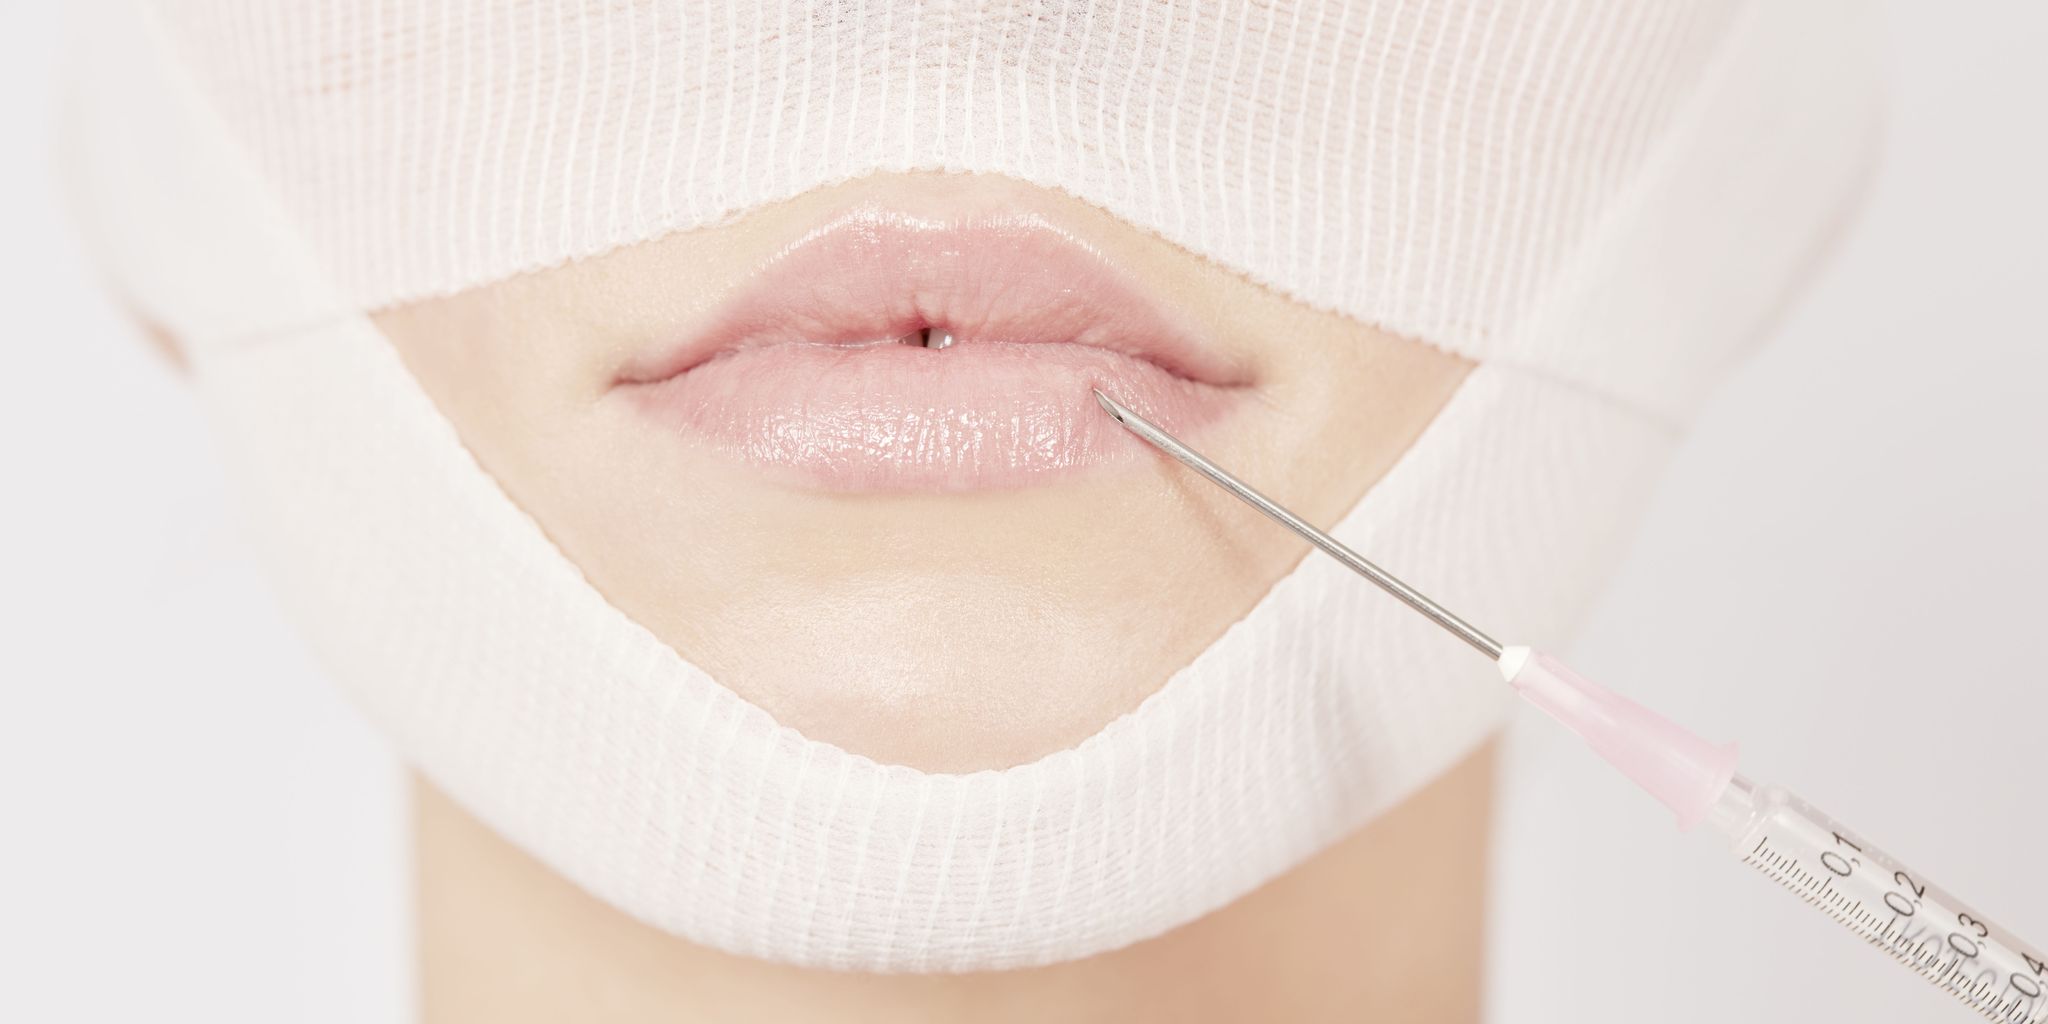 Syringe injecting botox into womans lips.